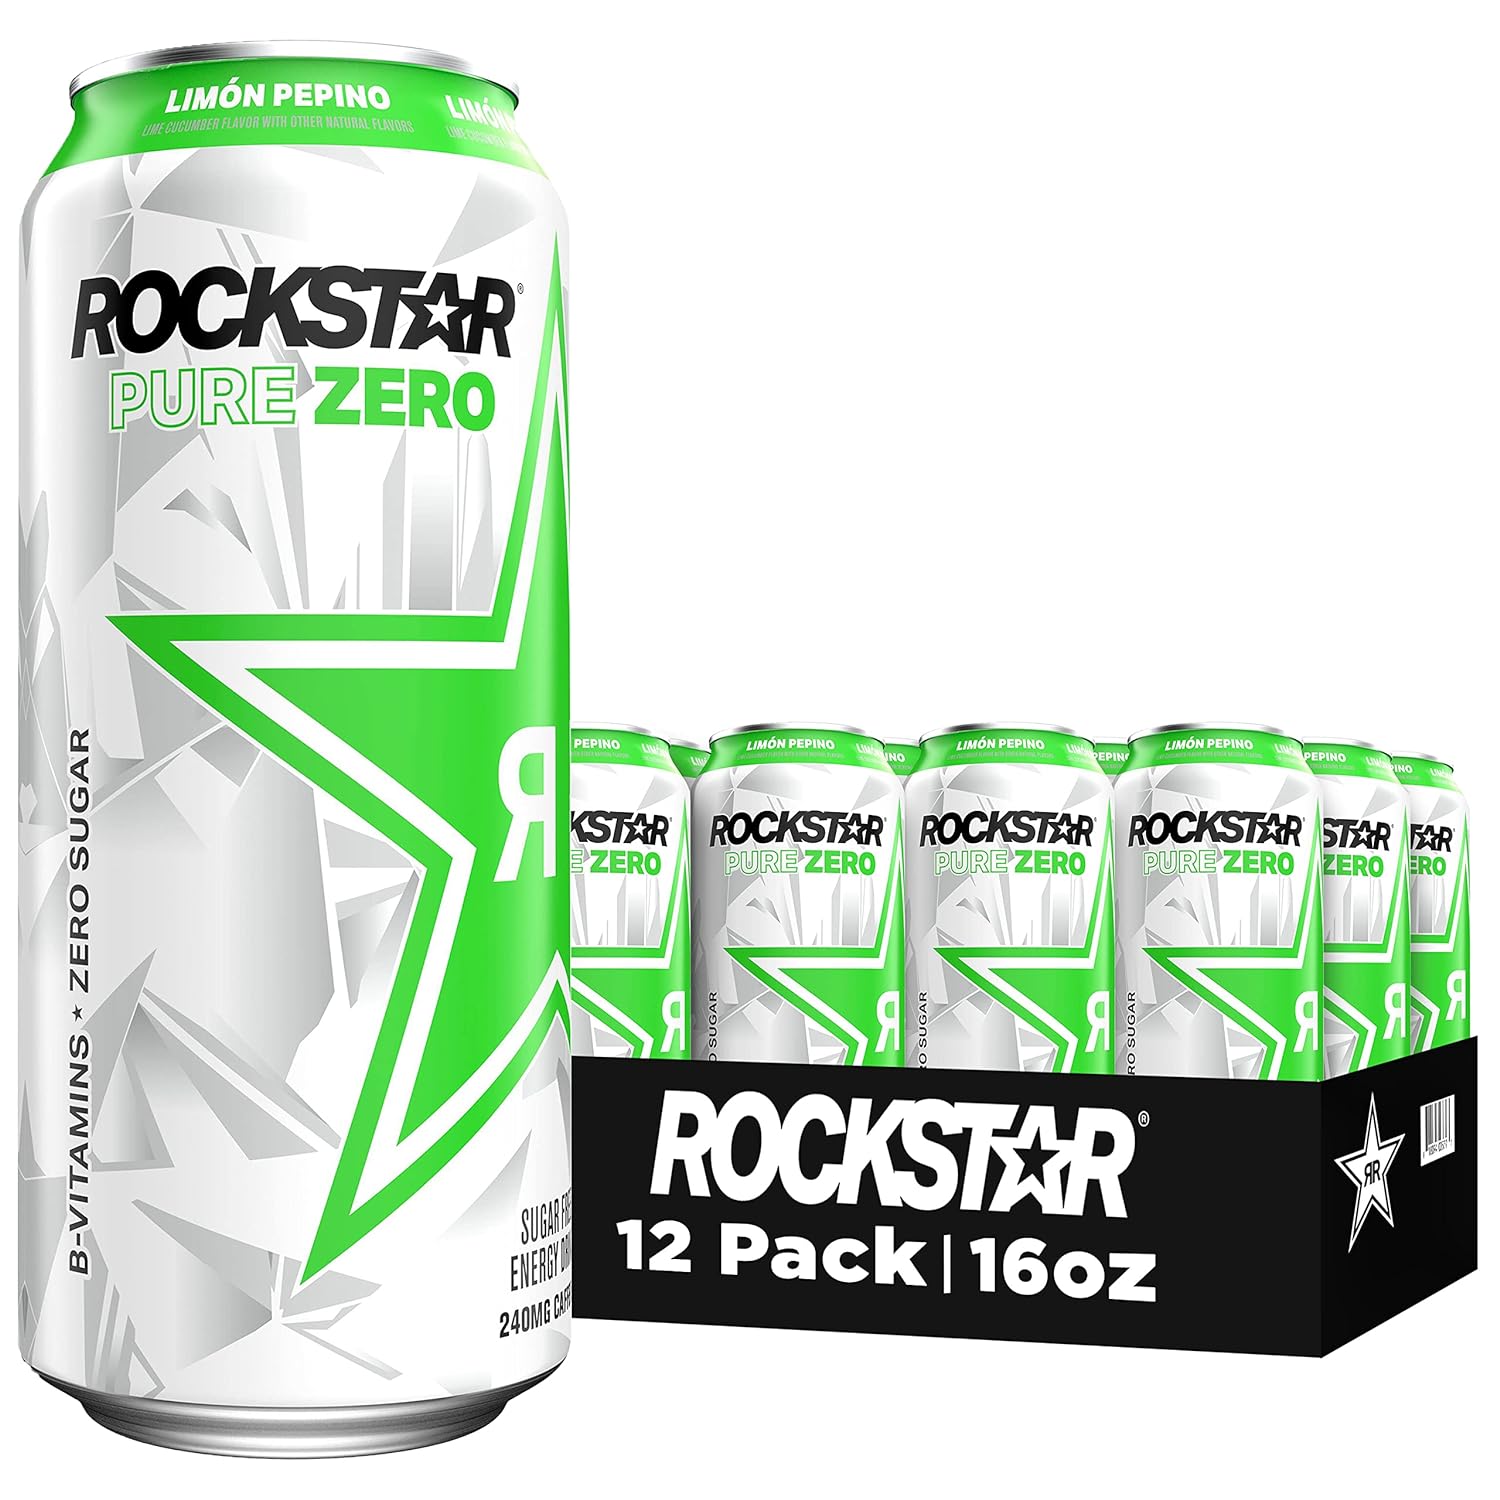 12-Pack 16oz Rockstar Pure Zero Energy Drink (Limon Pepino) $11.95 w/ S&S + Free S&H w/ Prime or $35+